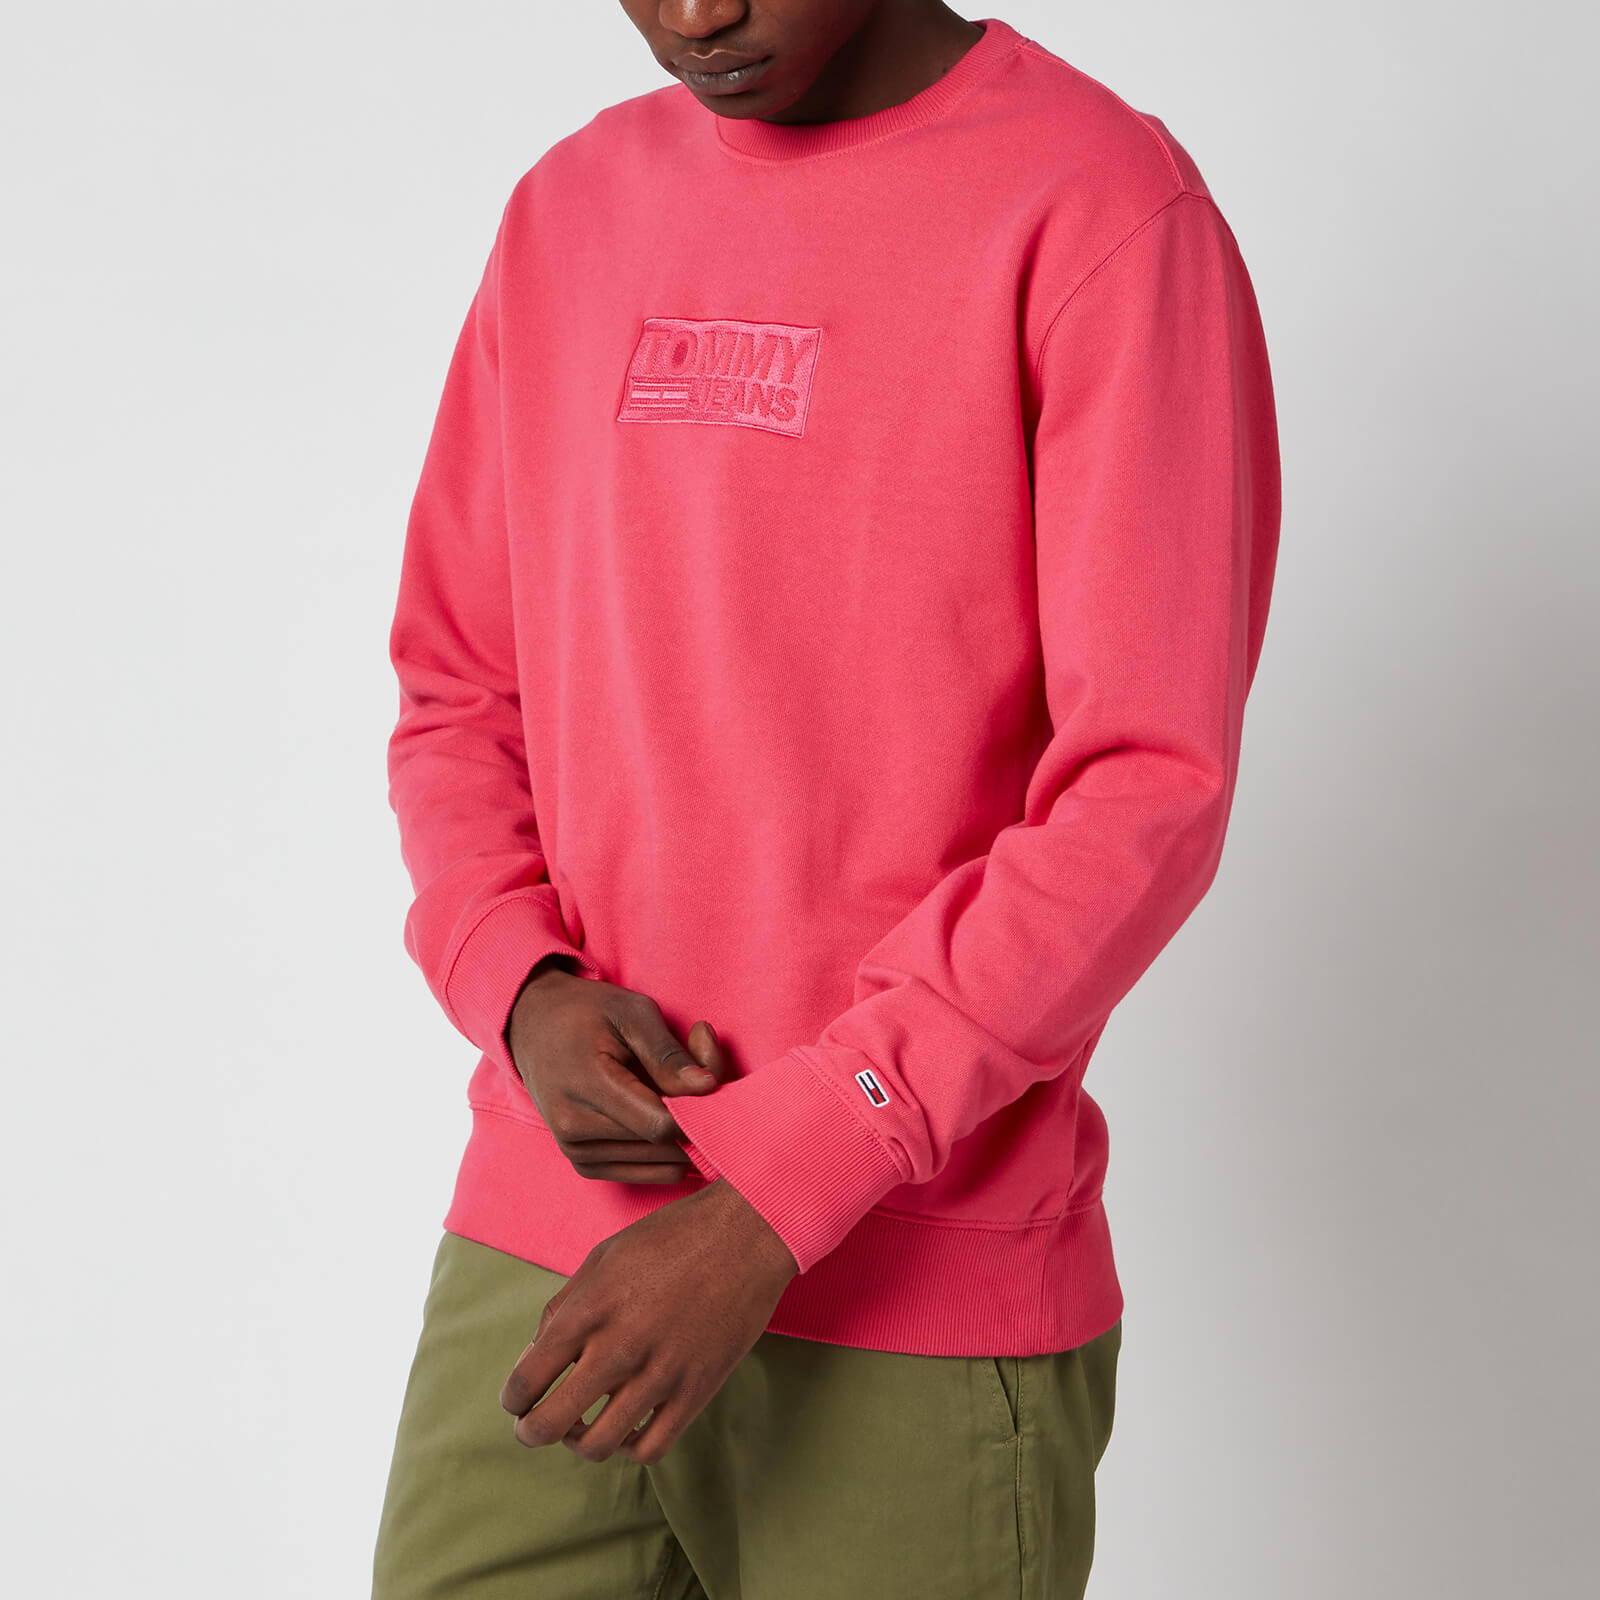 Tommy Jeans Men's Tonal Corporation Logo Crewneck Sweatshirt - Bright Cherise Pink - S